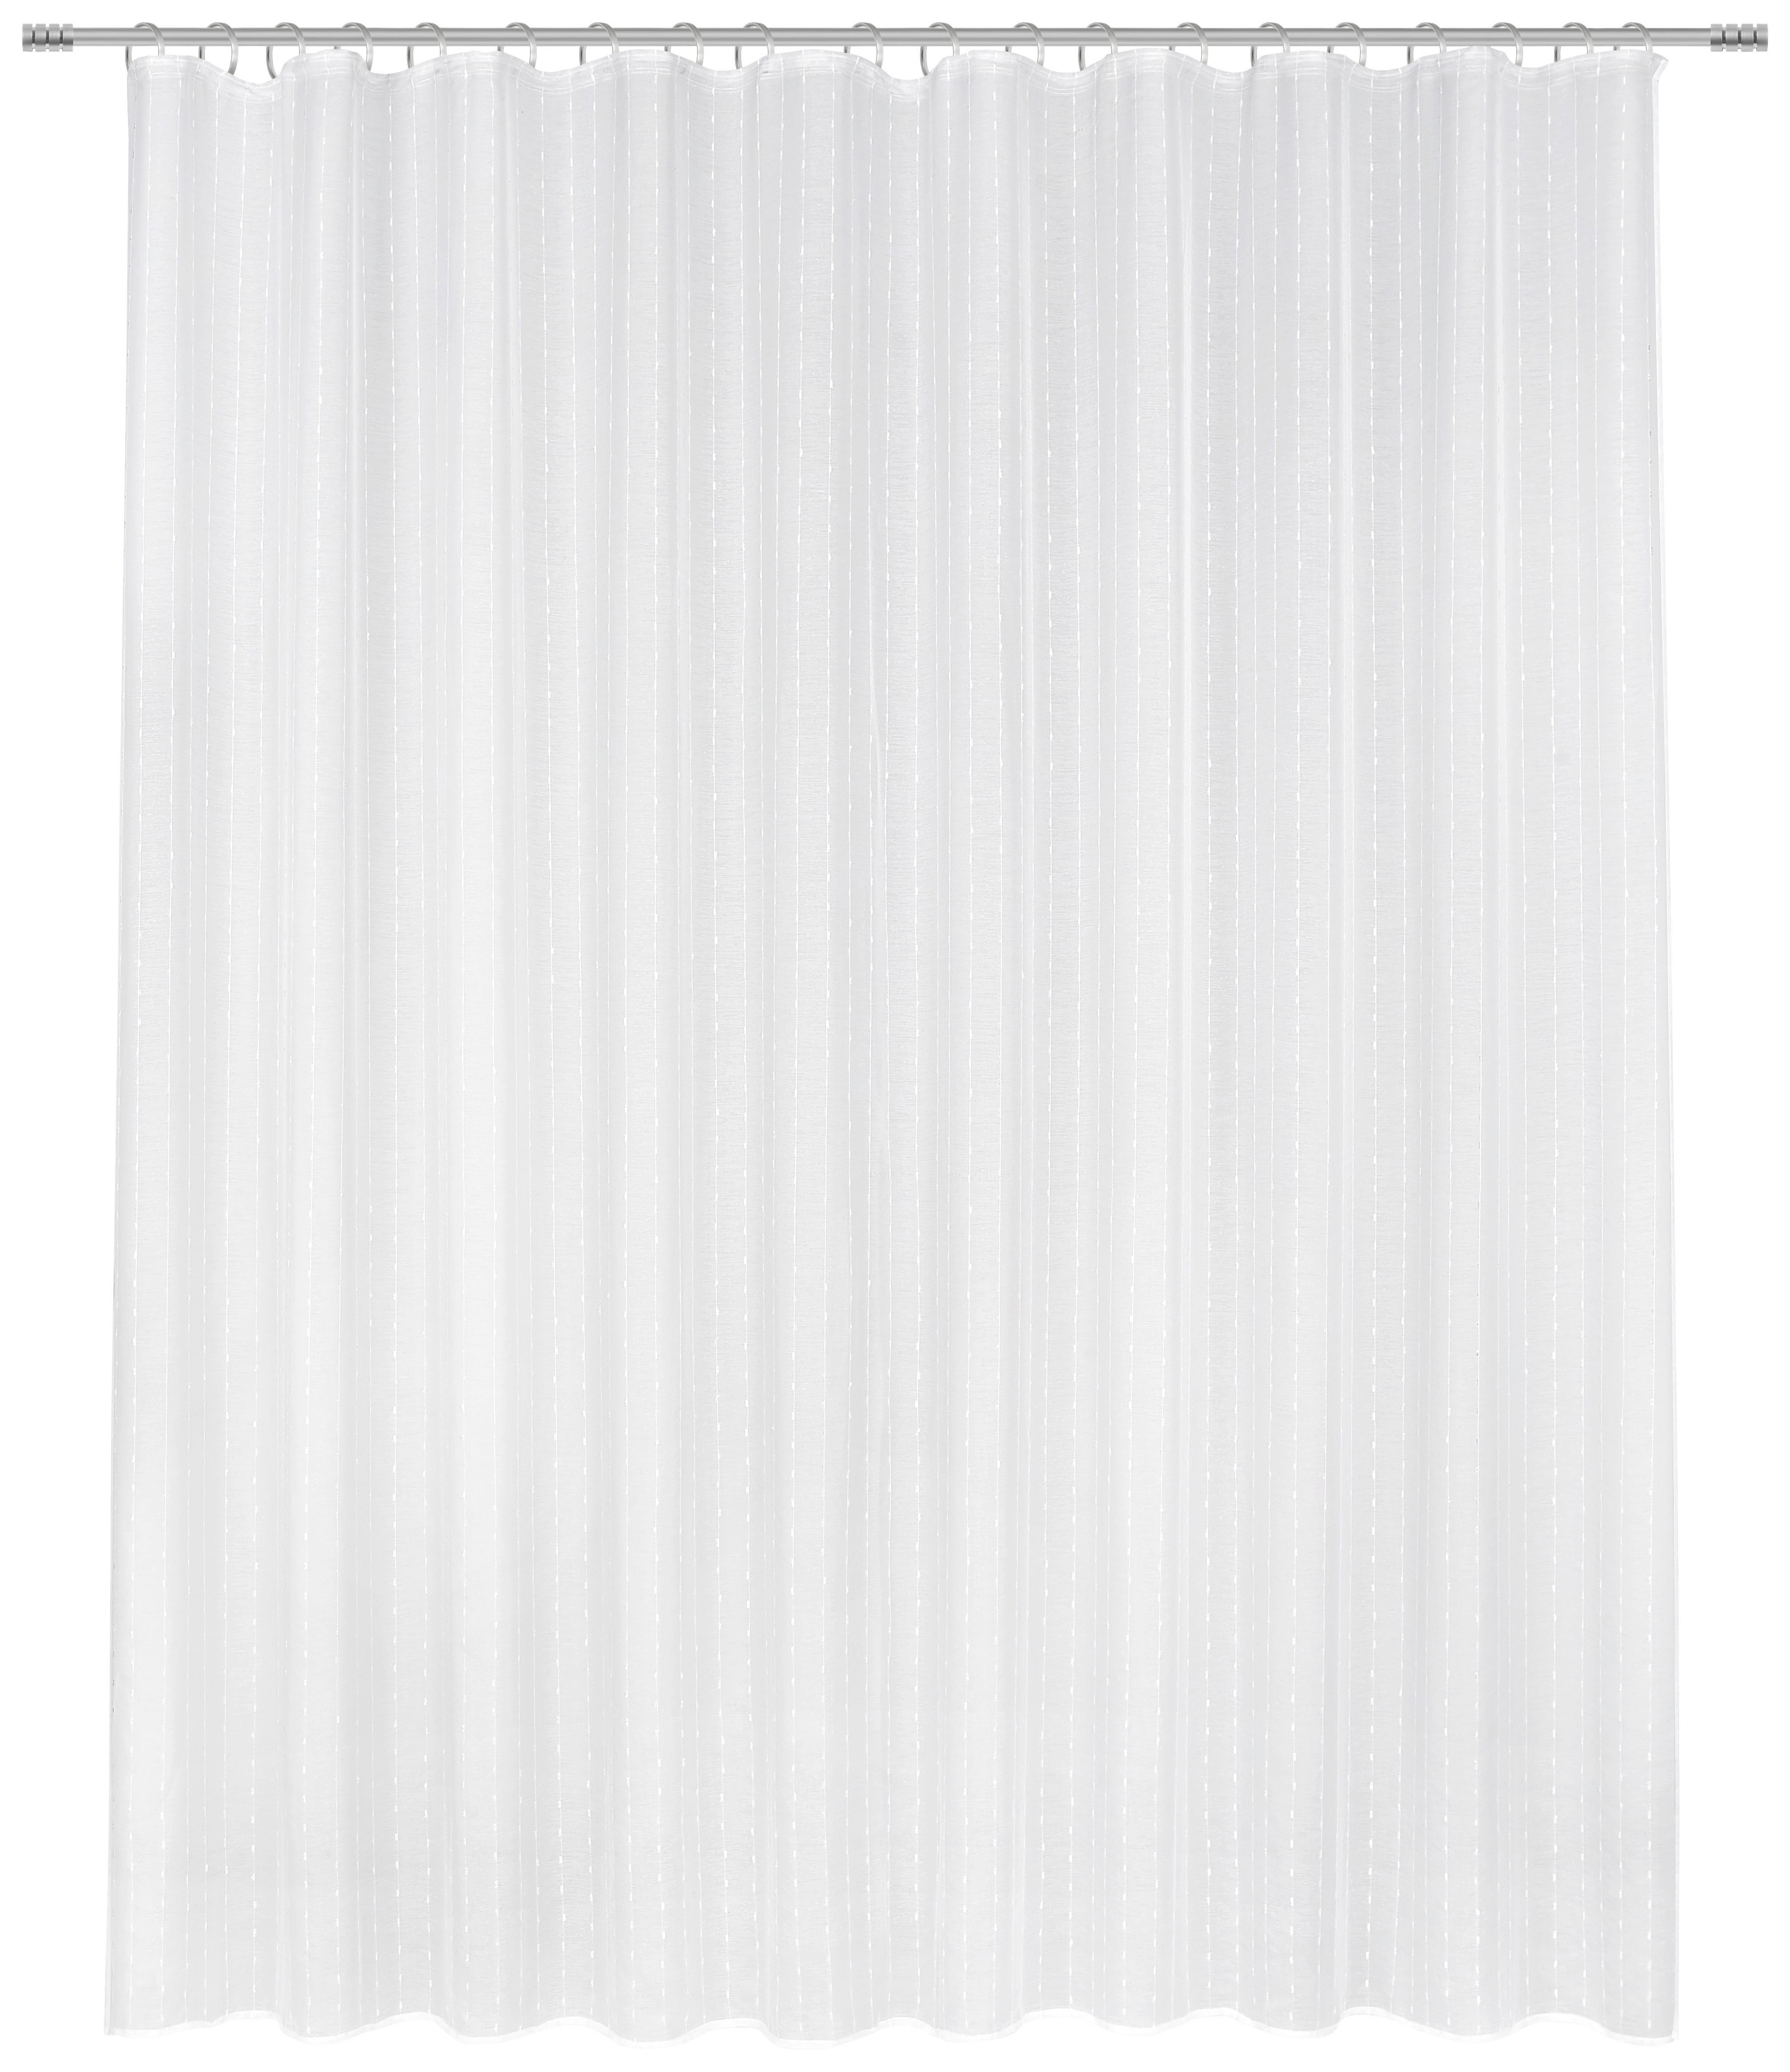 Kusová Záclona Lisa Store 3, 300/245cm - biela, Romantický / Vidiecky, textil (300/245cm) - Modern Living